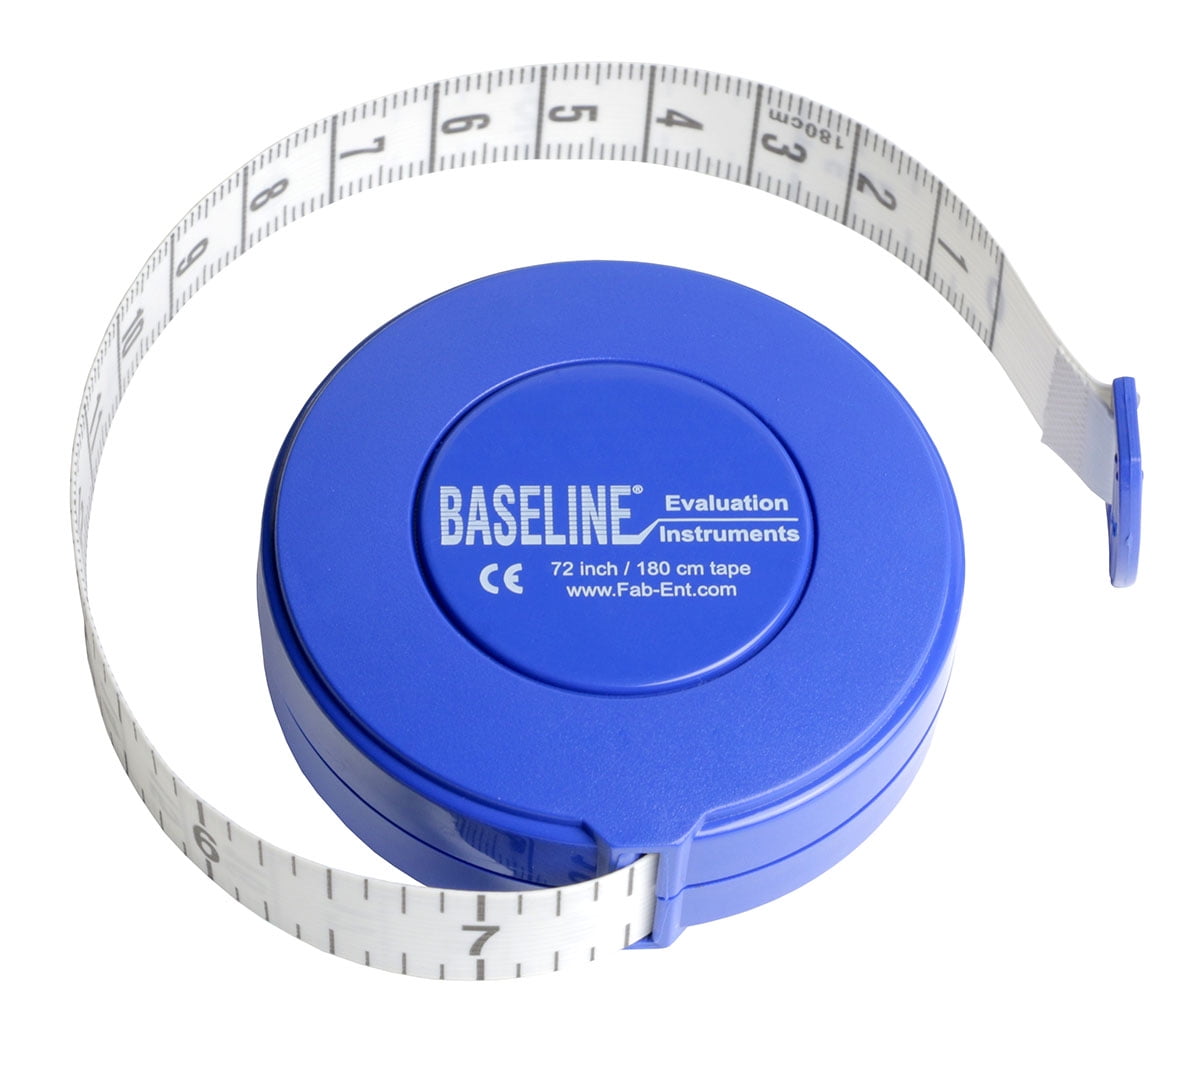 3B Scientific Baseline Woven Measurement Tape with Push-Button Retractor